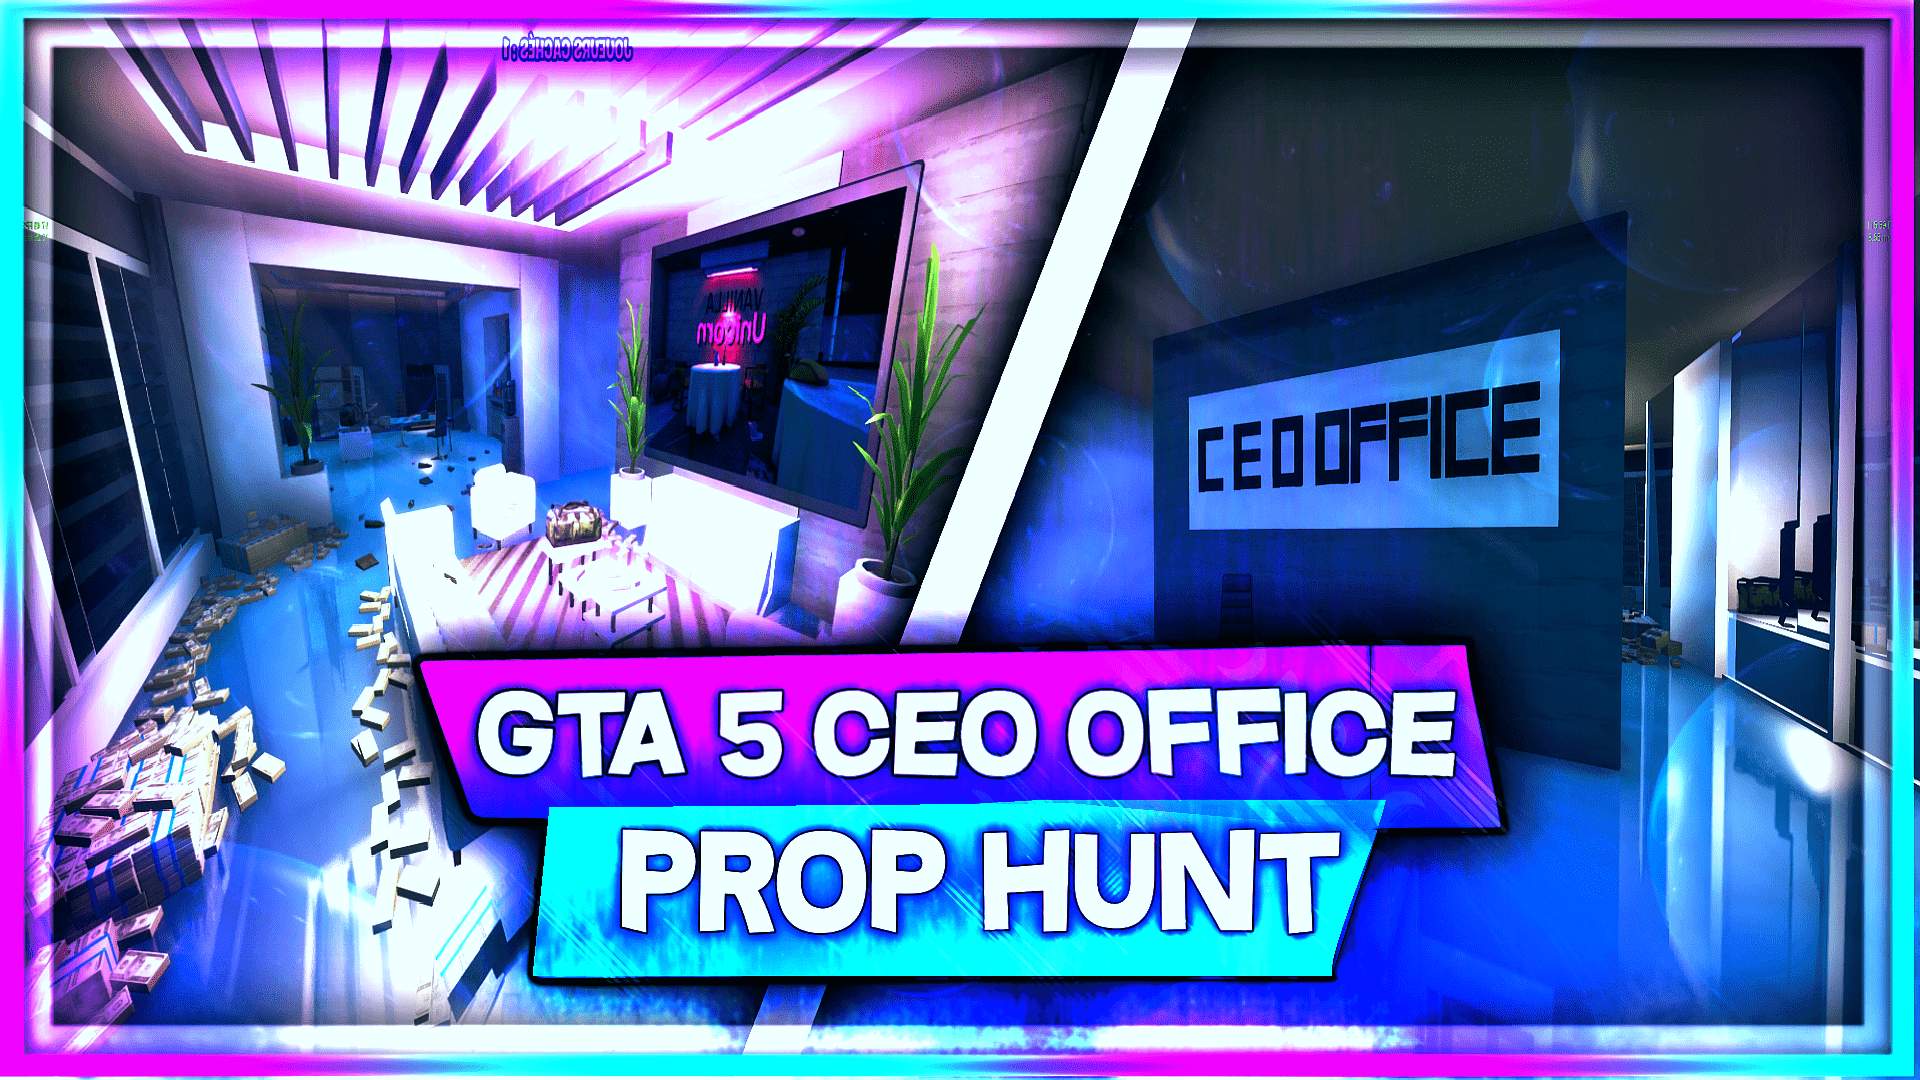 GTA 5 CEO OFFICE PROP HUNT